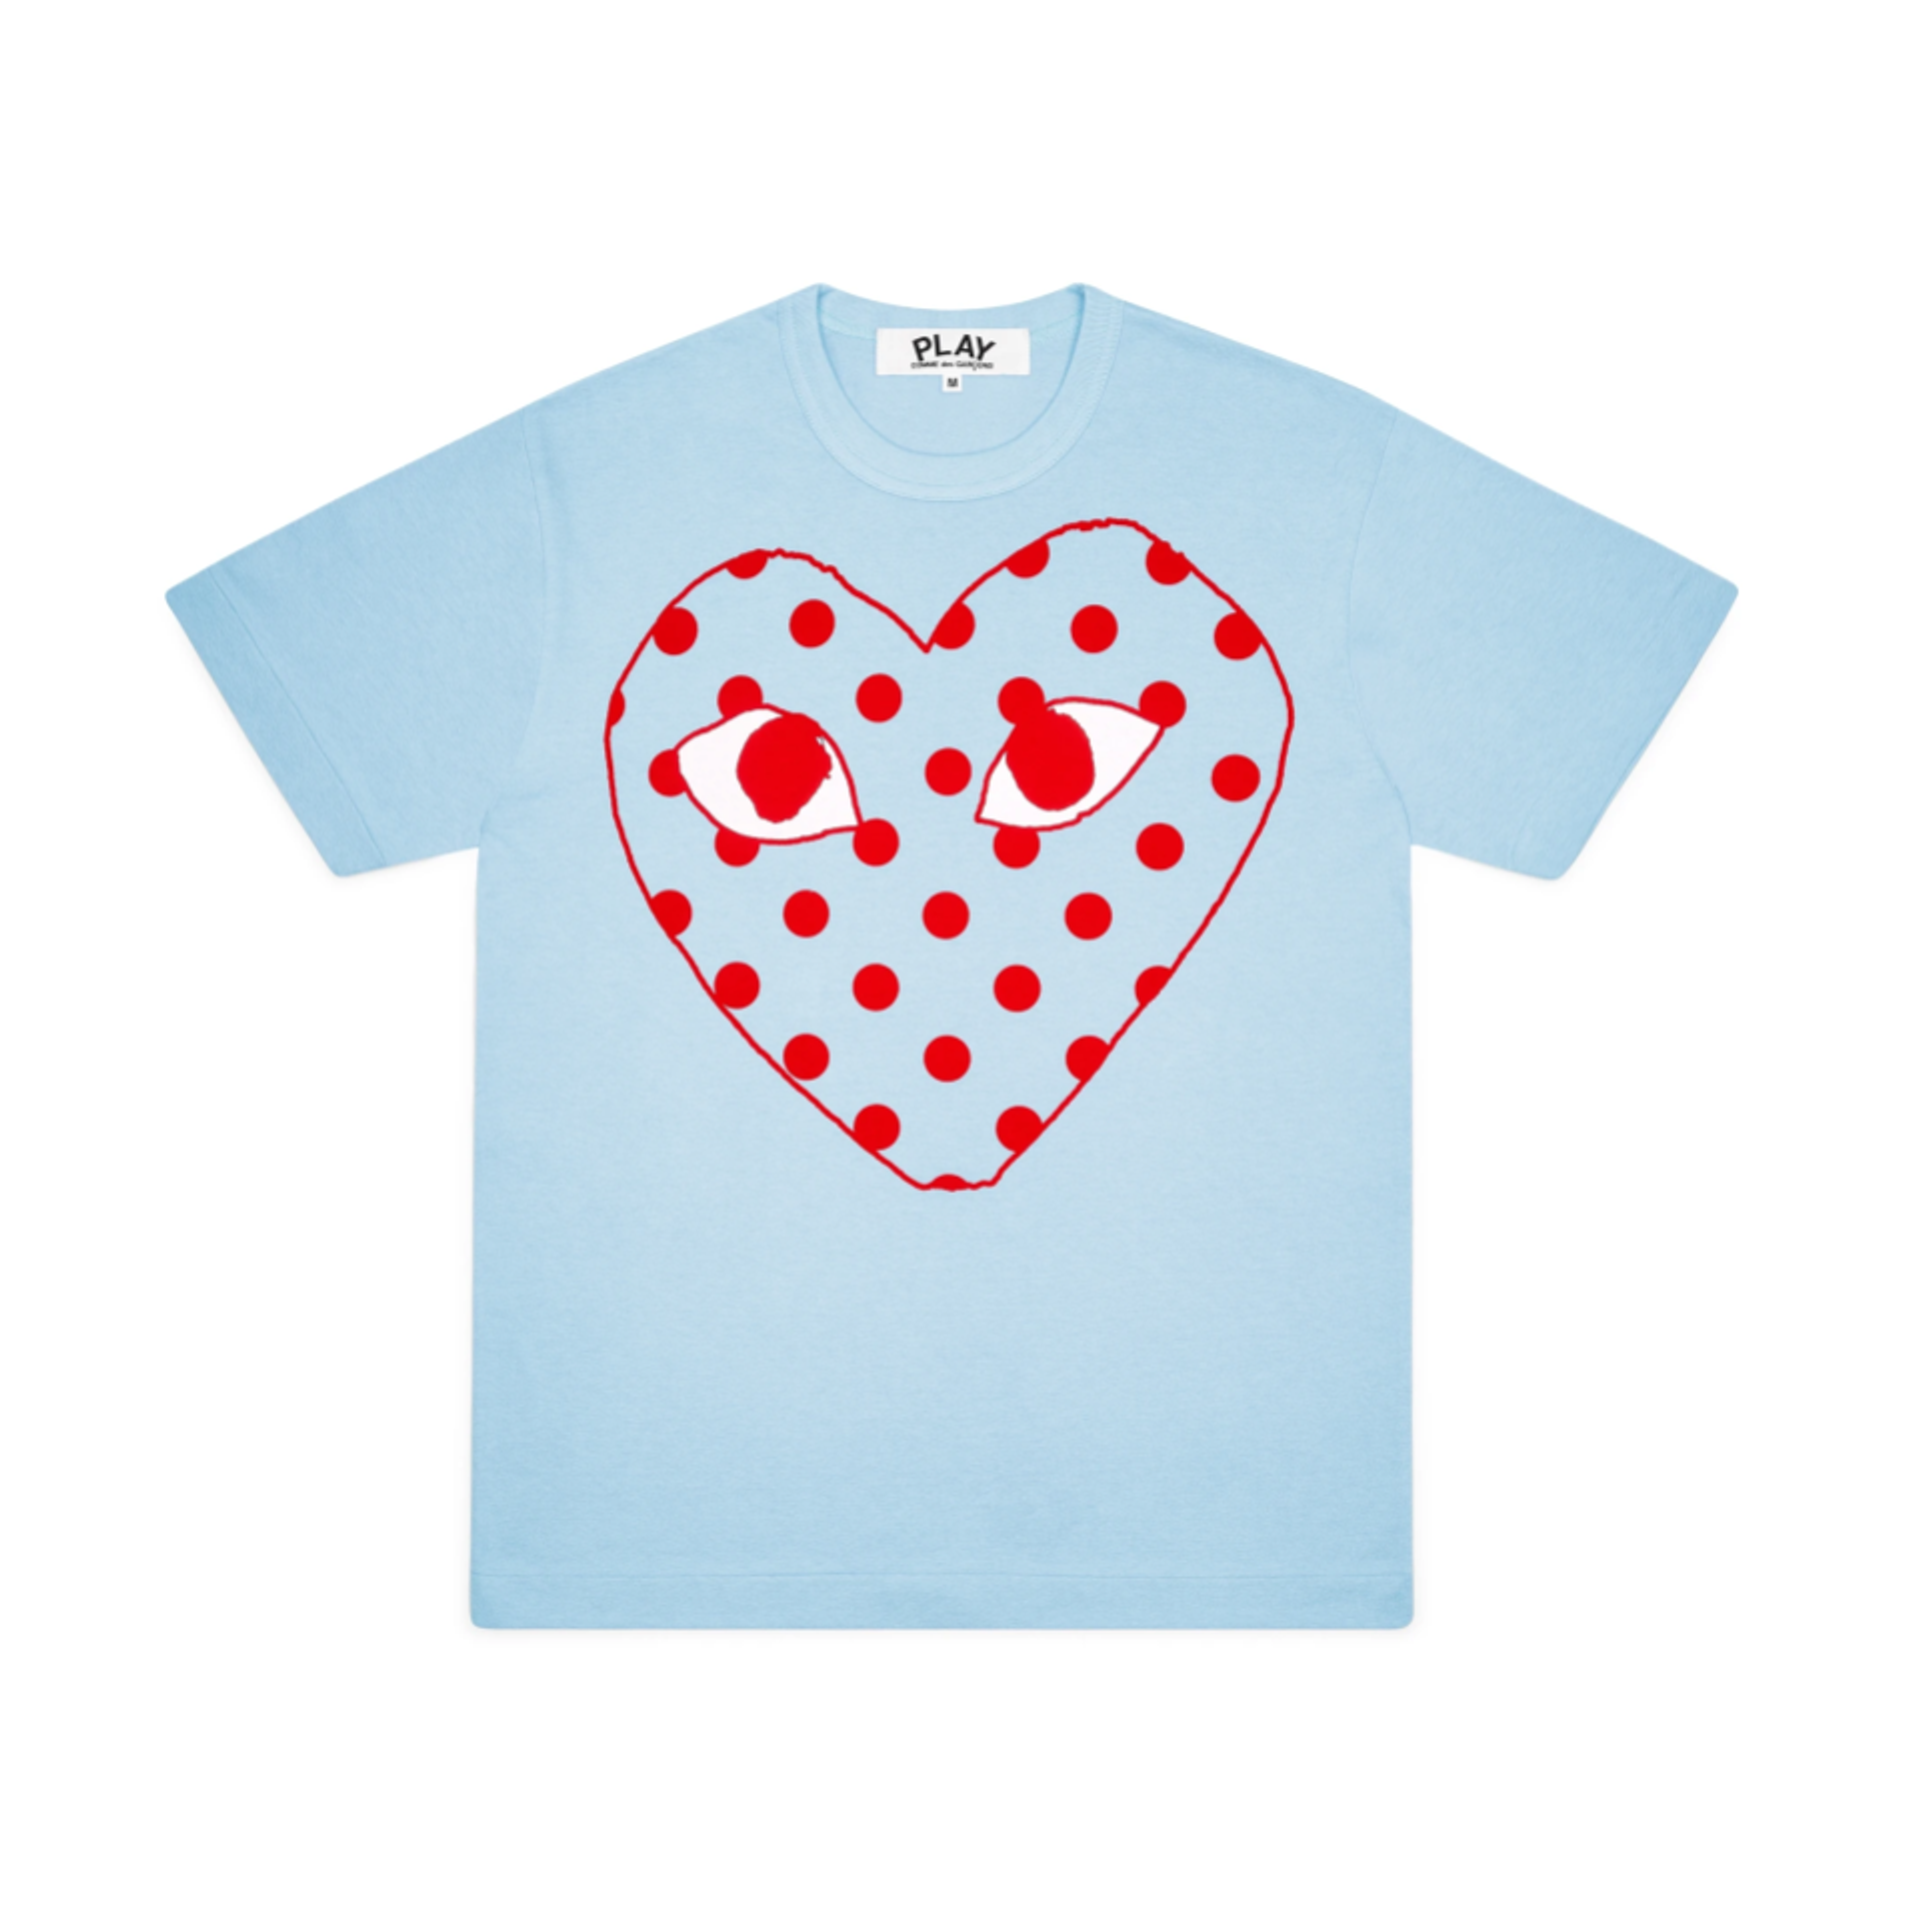 PLAY Comme des Garcons Polka Dot Heart T-Shirt (Blue) Men's